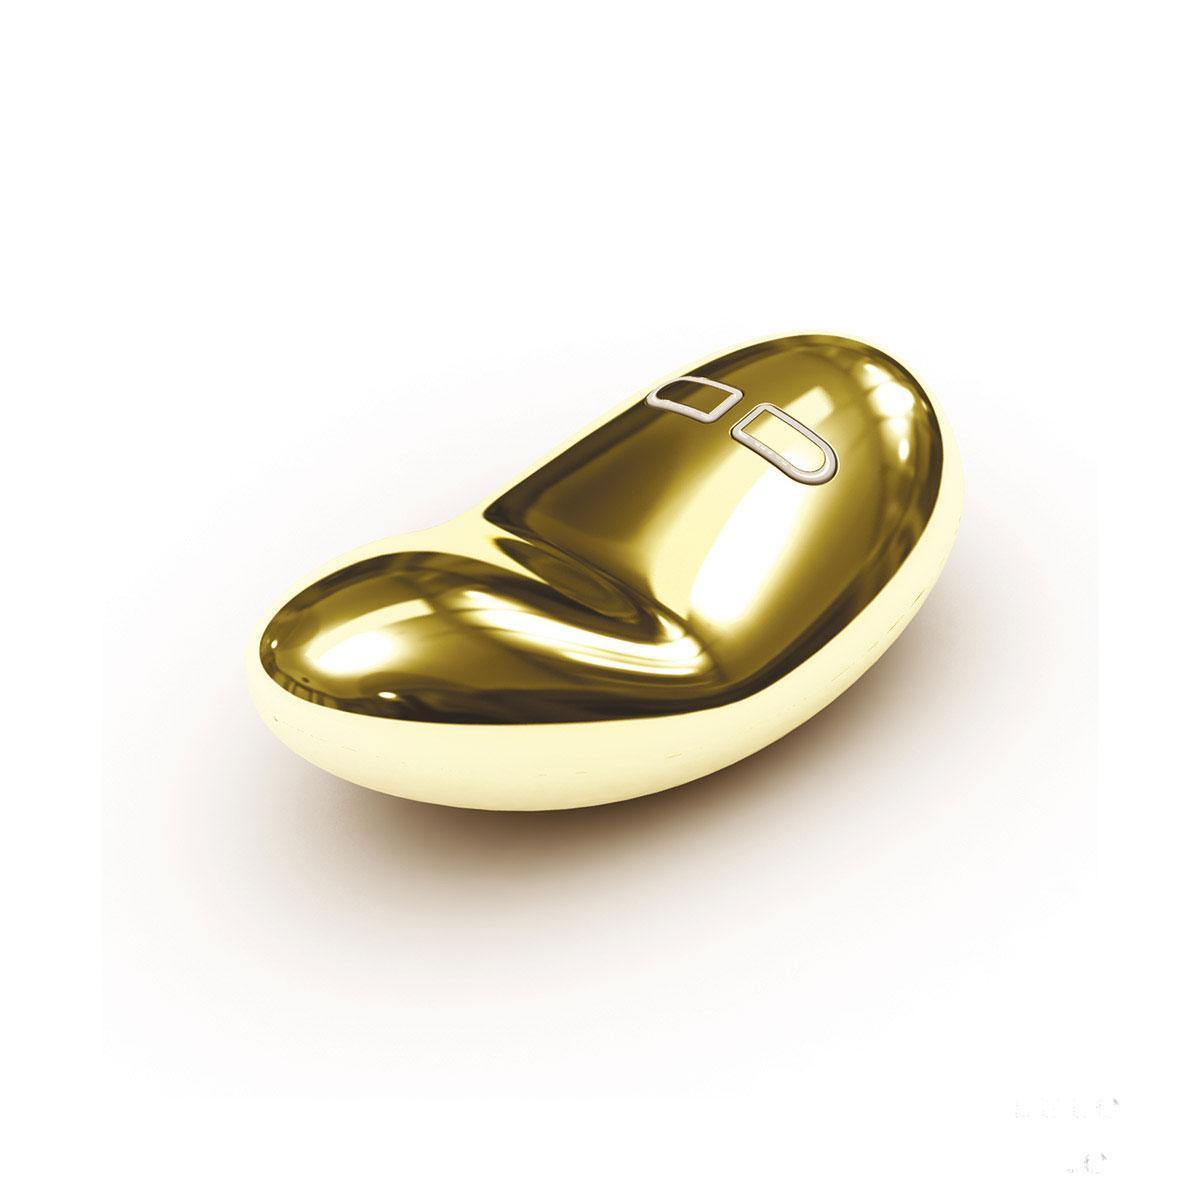 Lelo Yva 24K Gold - Buy At Luxury Toy X - Free 3-Day Shipping